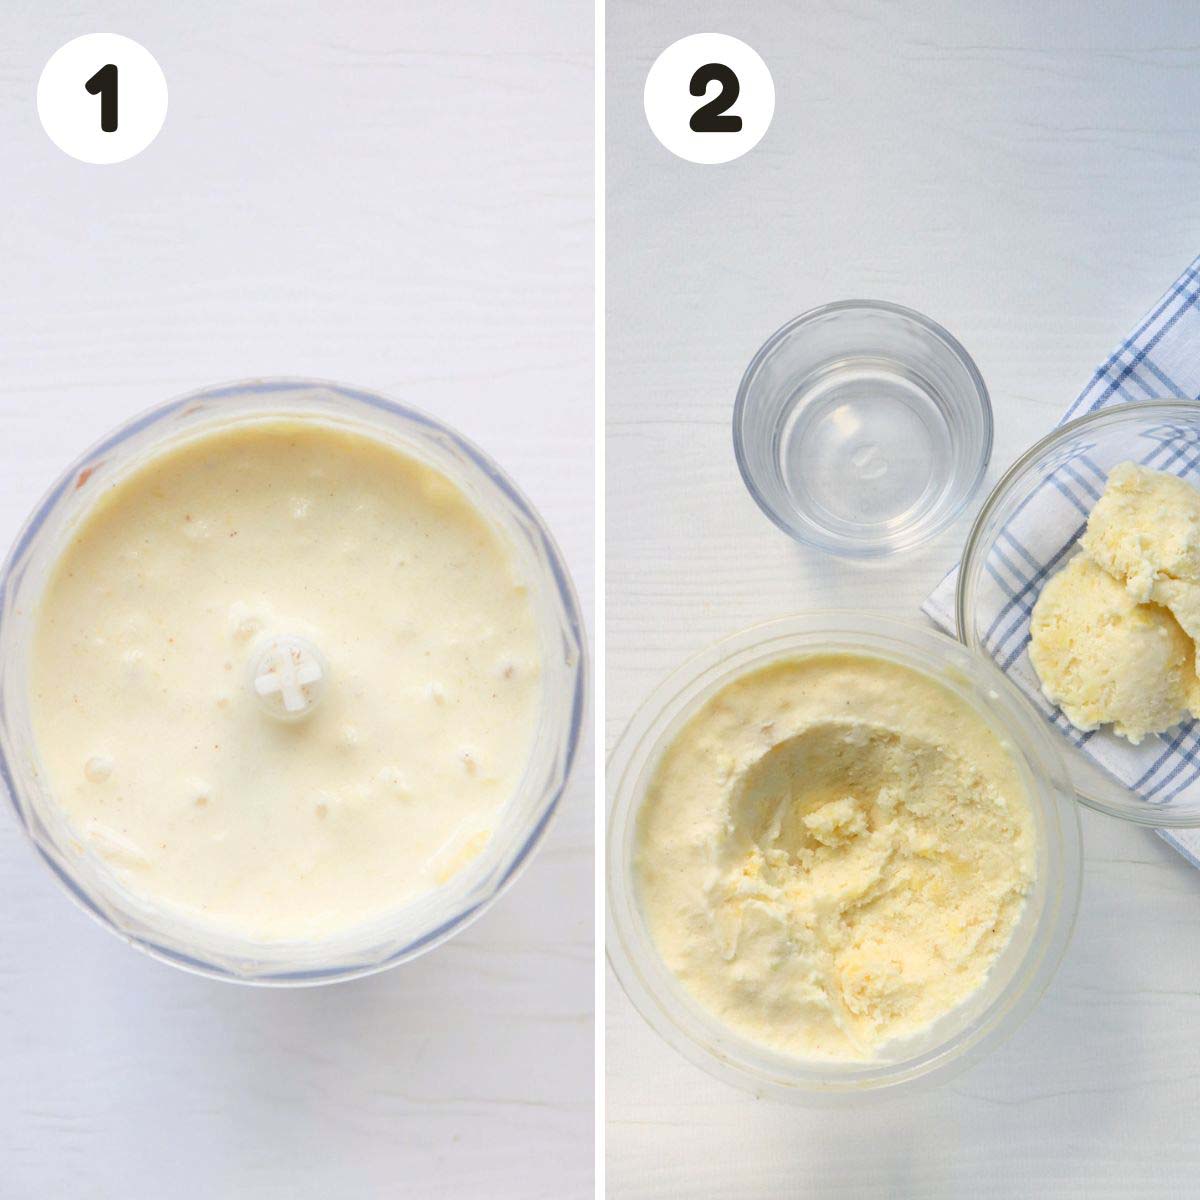 Steps to make the nice cream.